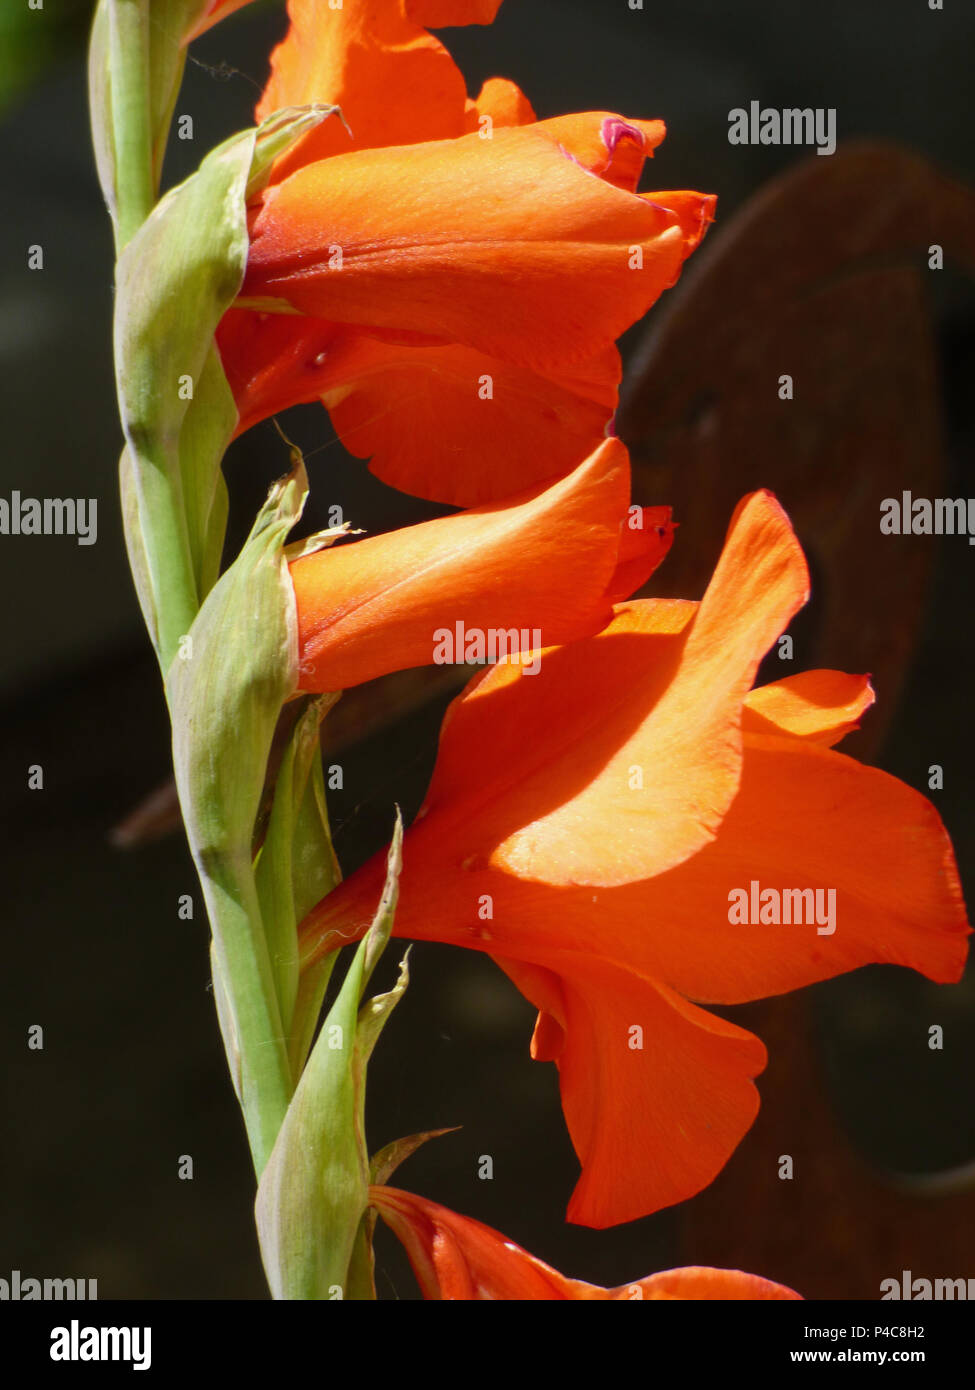 Stem of bright orange gladiola with black background Stock Photo